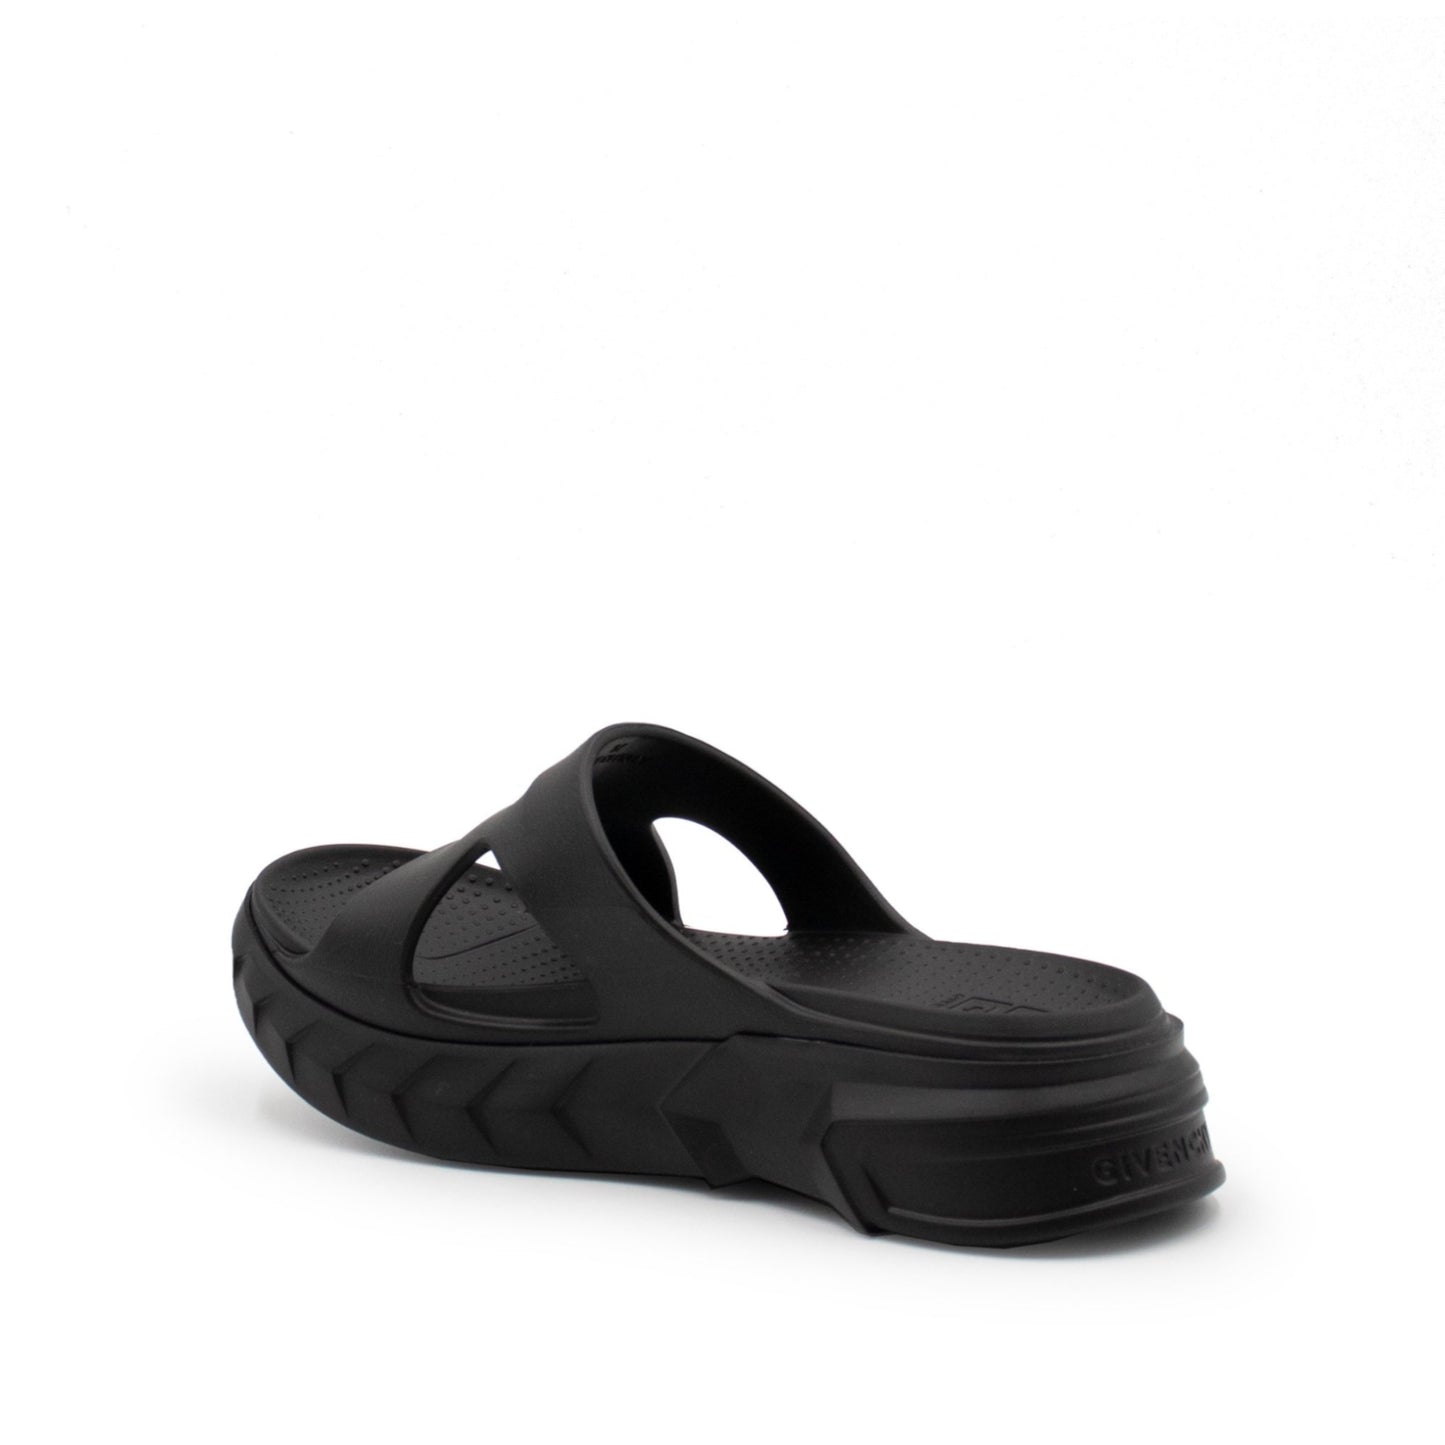 Marshmallow Slider Sandals in Black